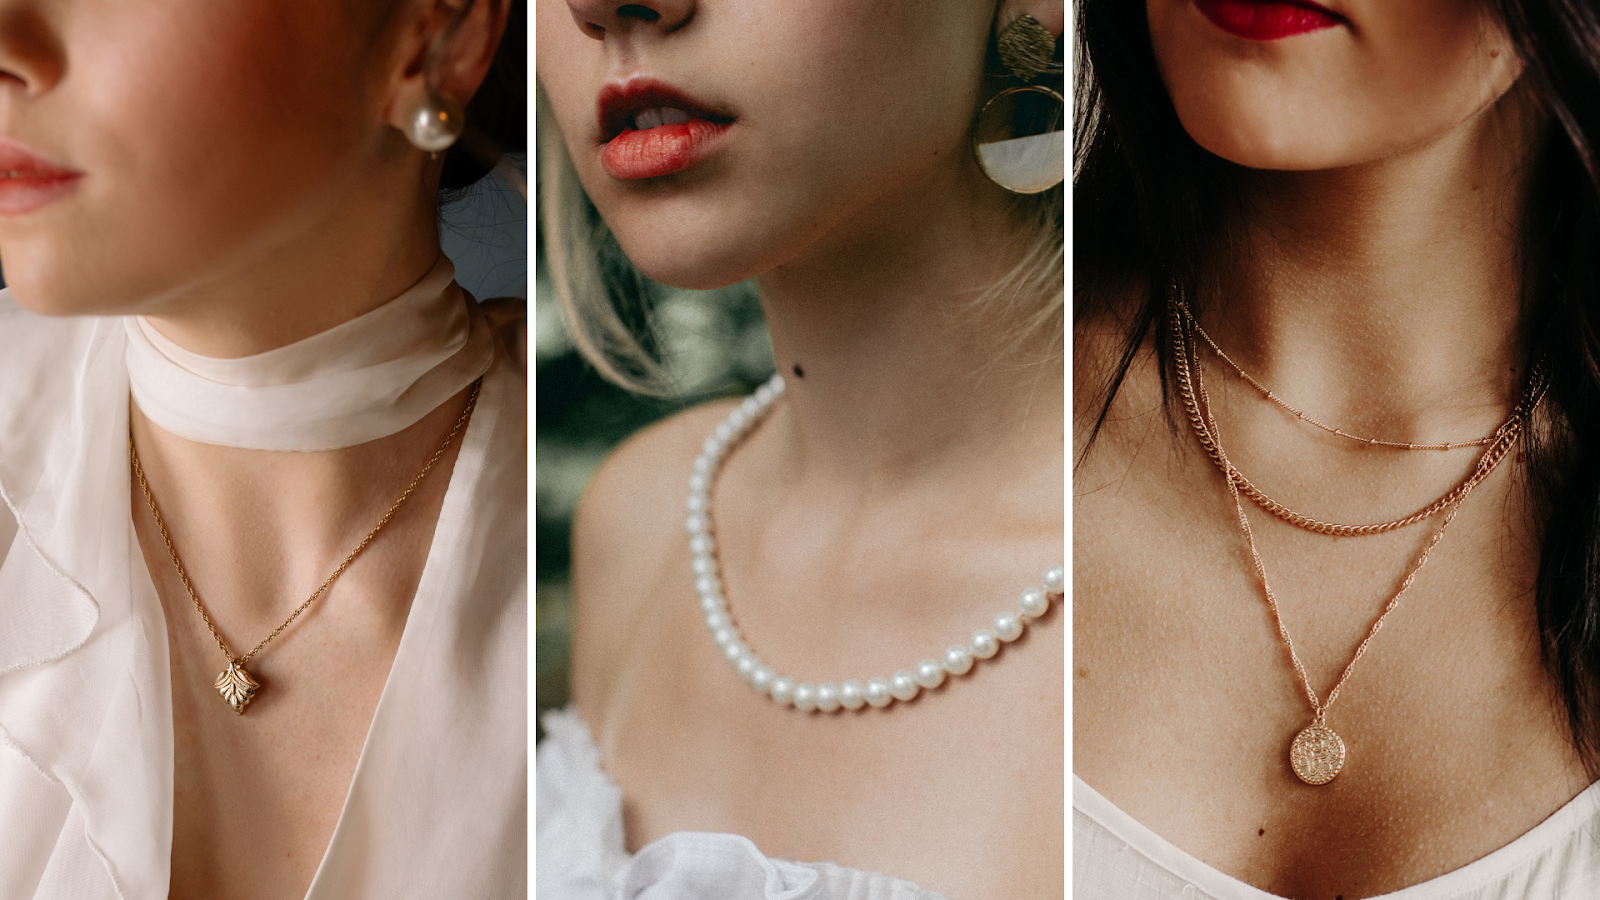 Acessórios do estilo romântico: colares de pérolas e colares dourados.